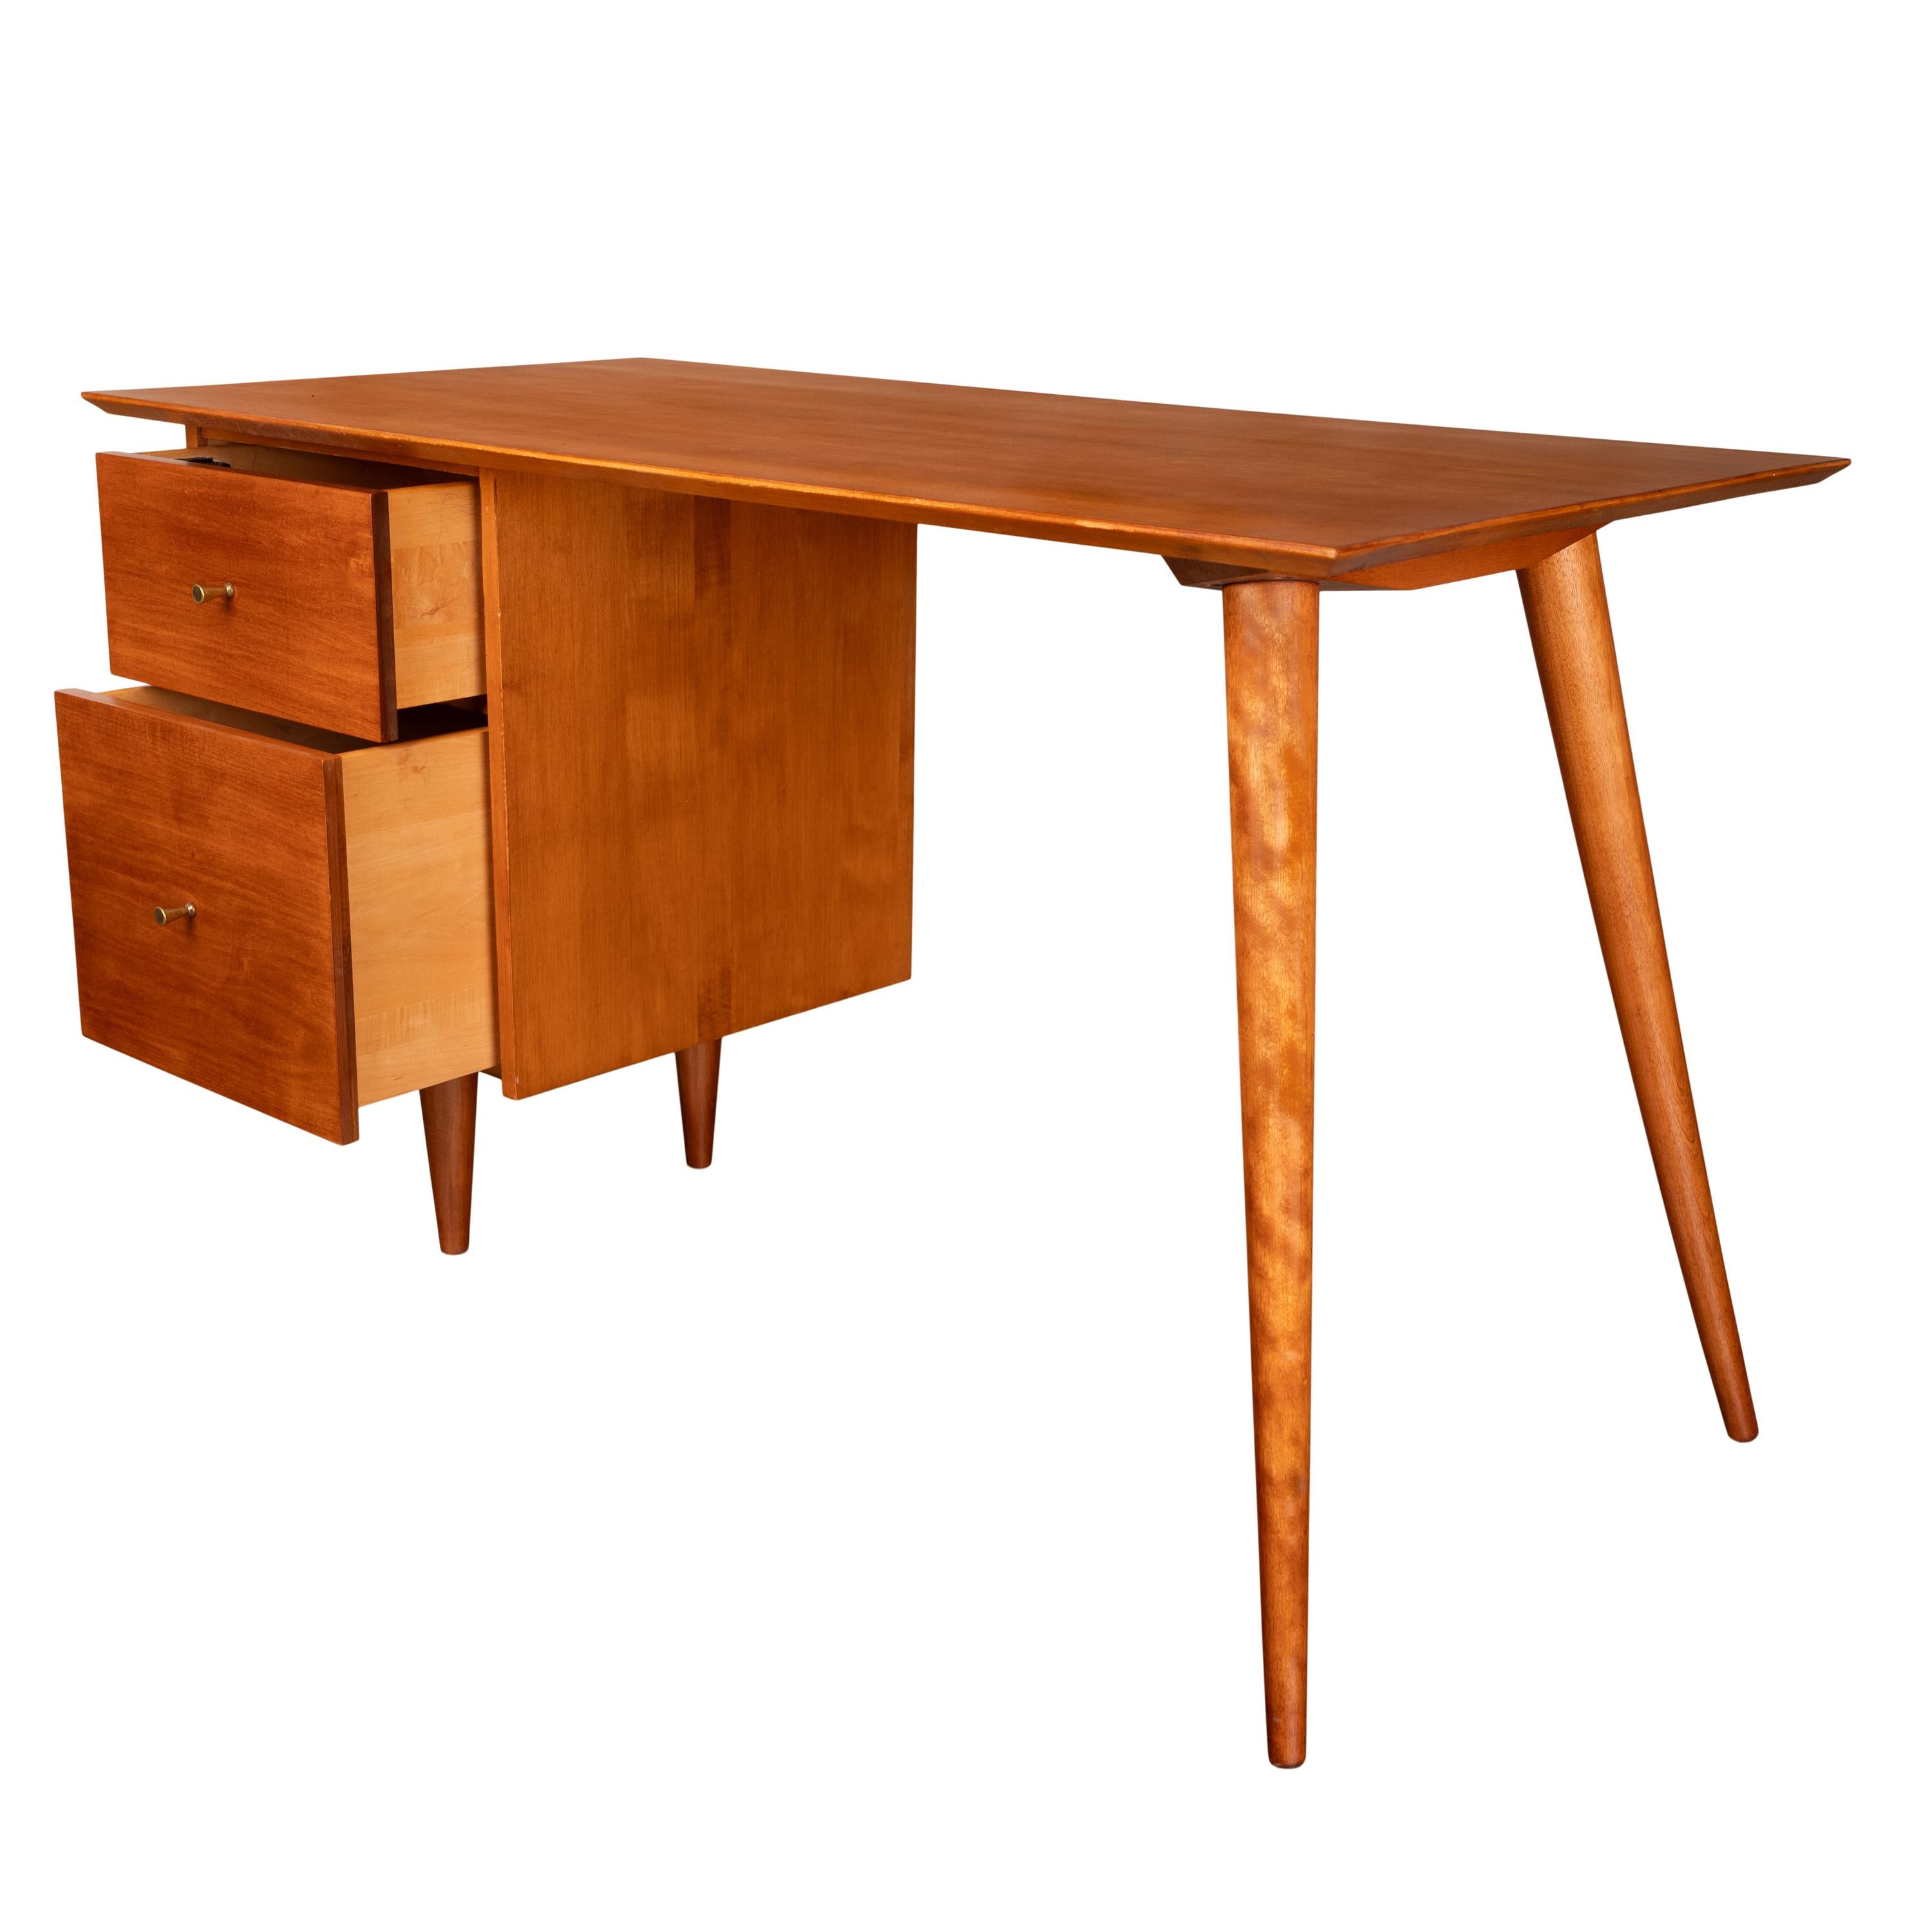 Mid-20th Century American Mid Century Modern Paul McCobb Planner Group Maple # 1560 Desk 1950's For Sale